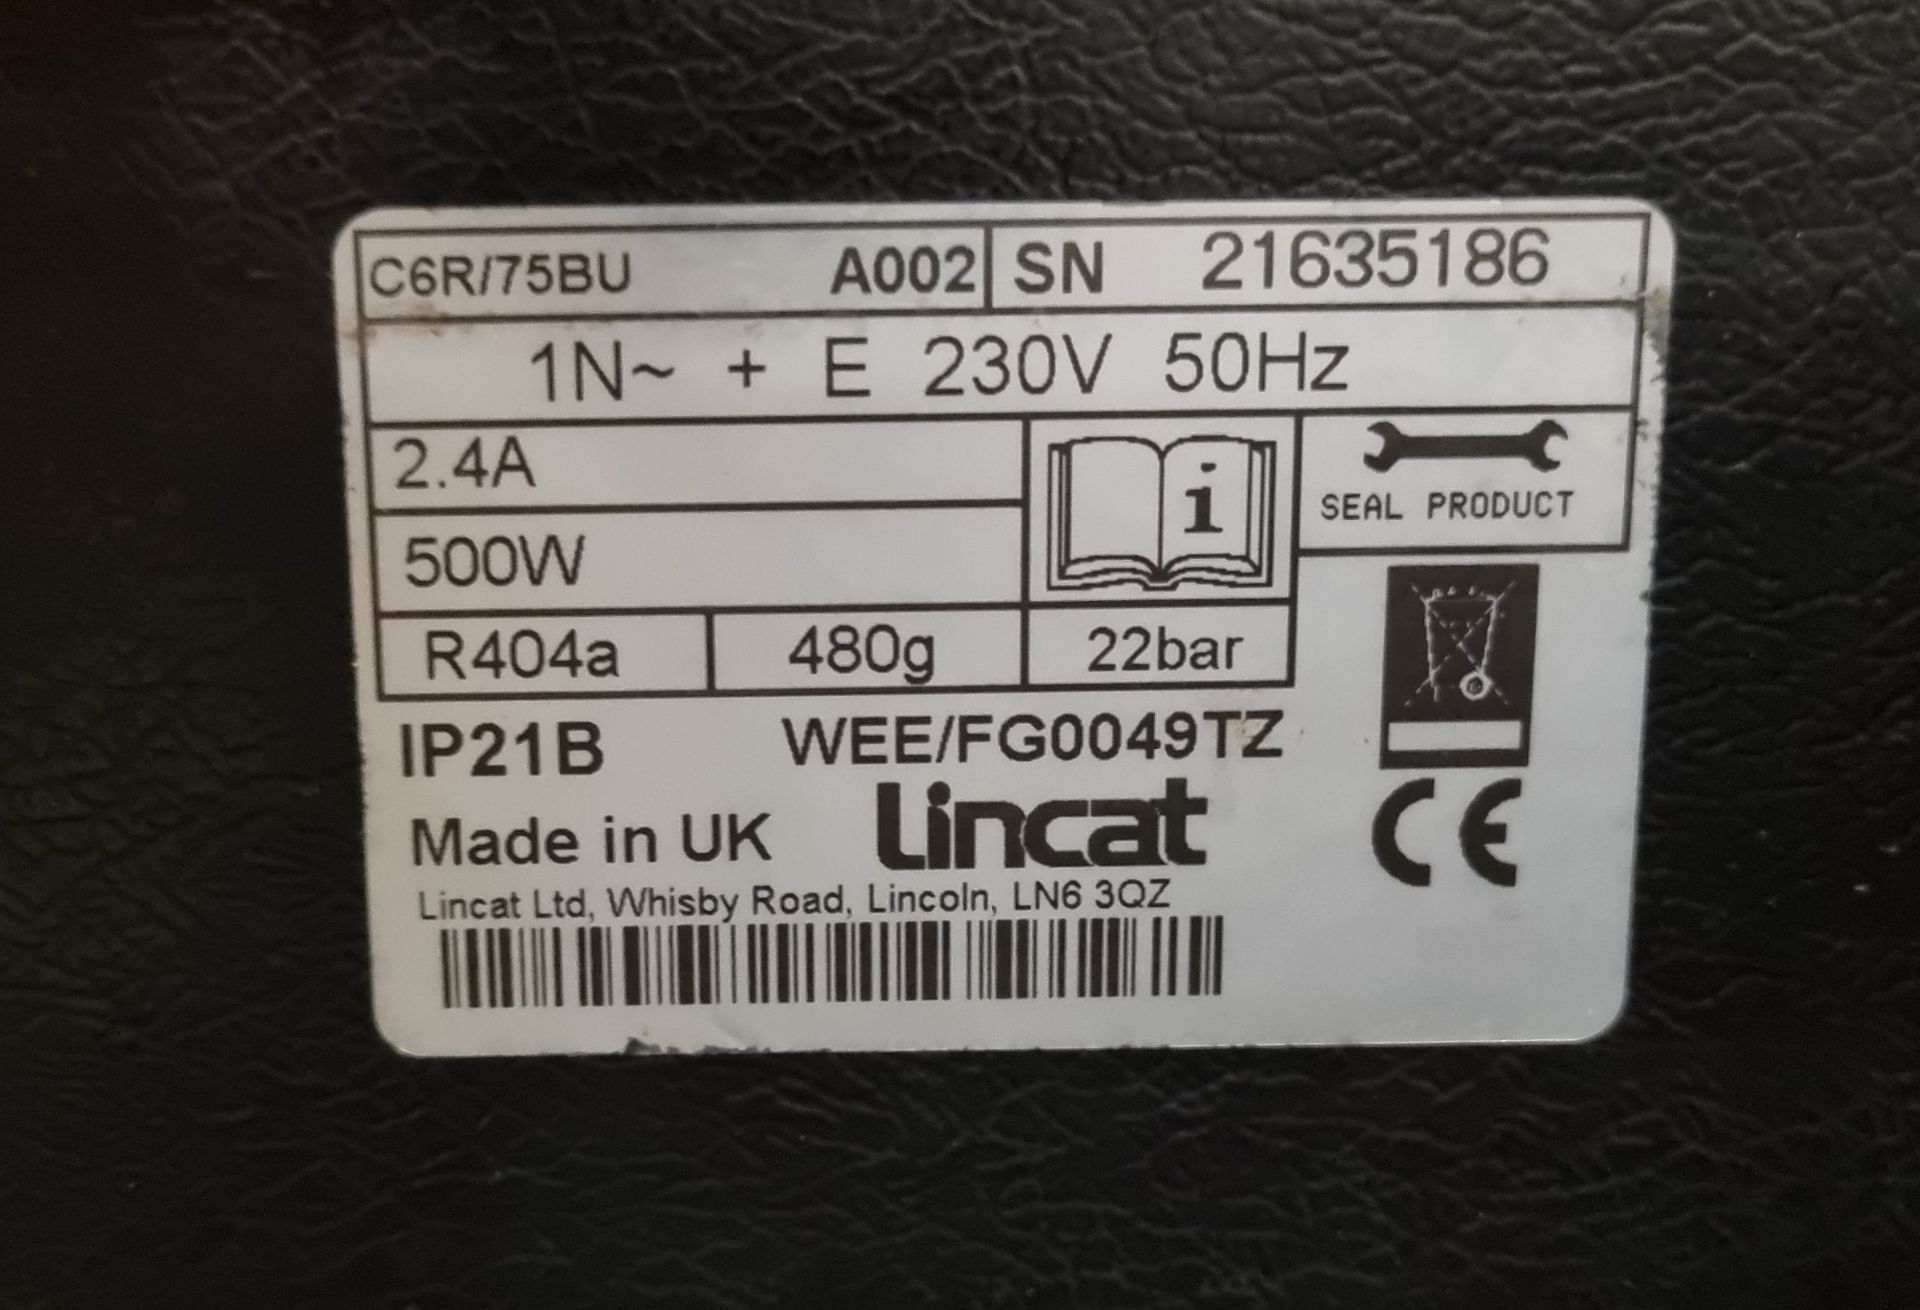 Lincat C6R/75BU chilled display unit - W 750 x D 650 x H 1040mm - Image 4 of 4